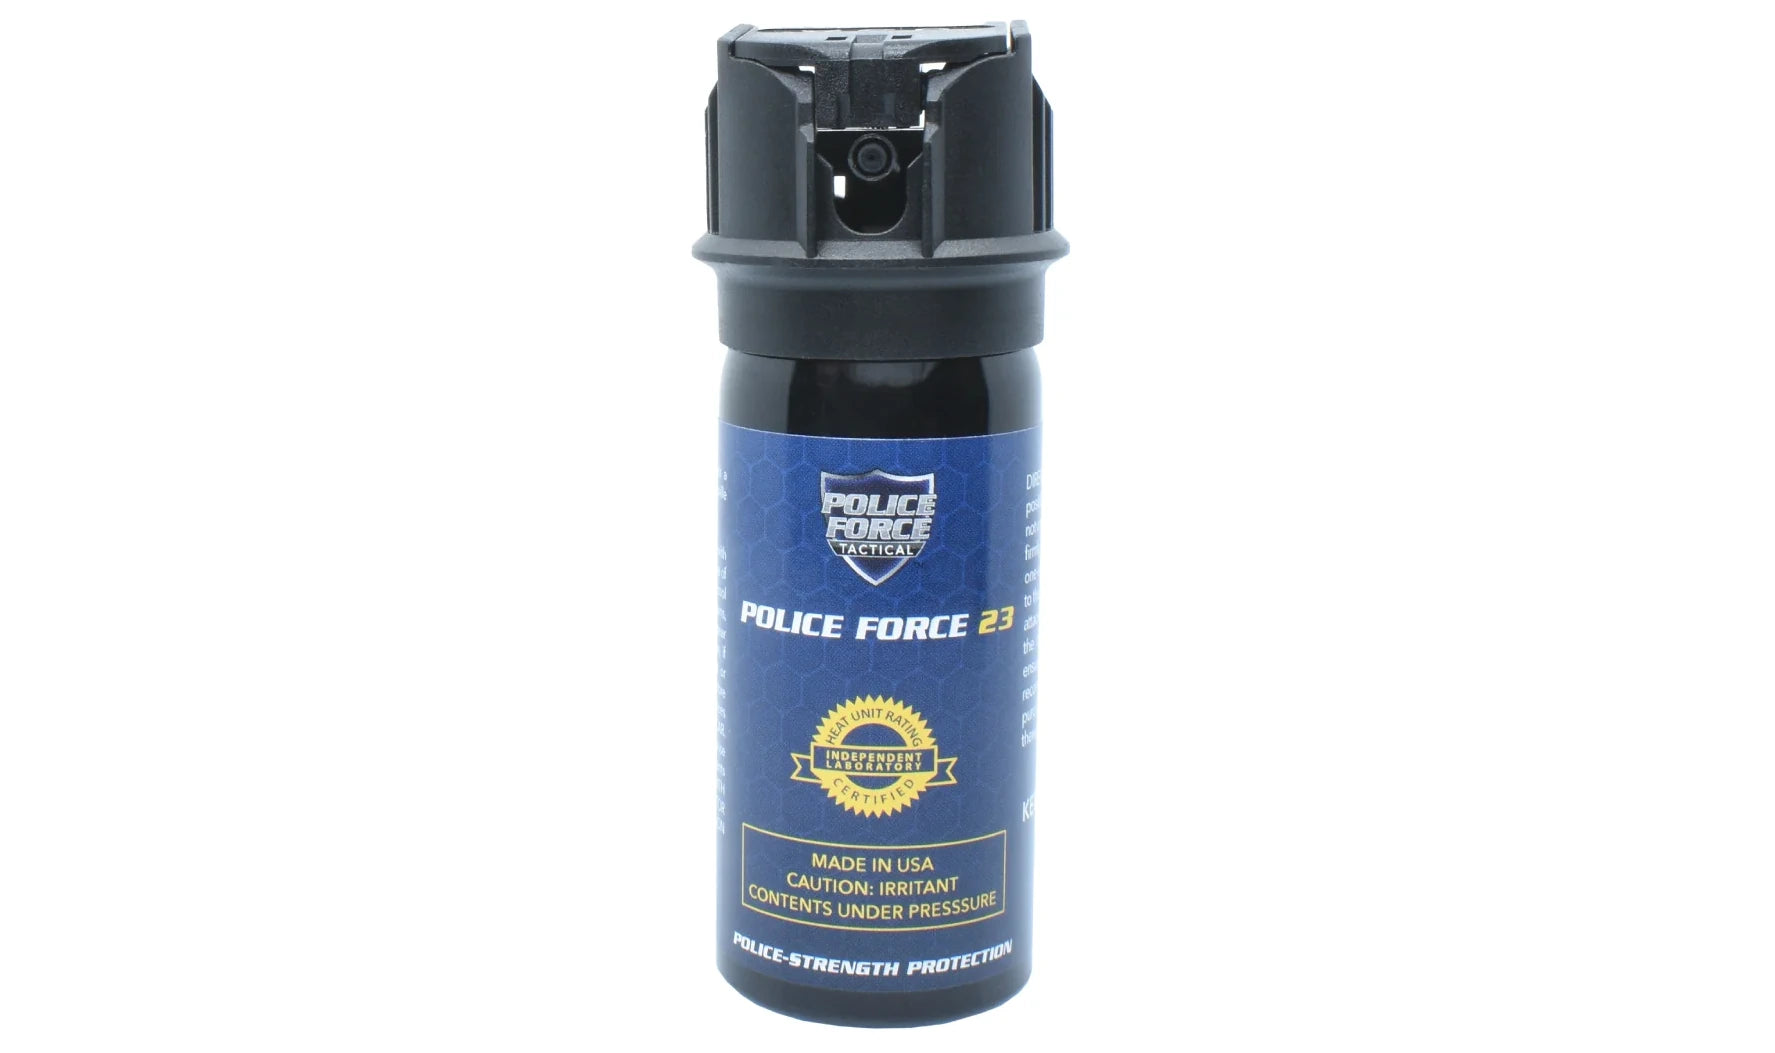 Police Magnum Large pepper spray fogger - home defense security